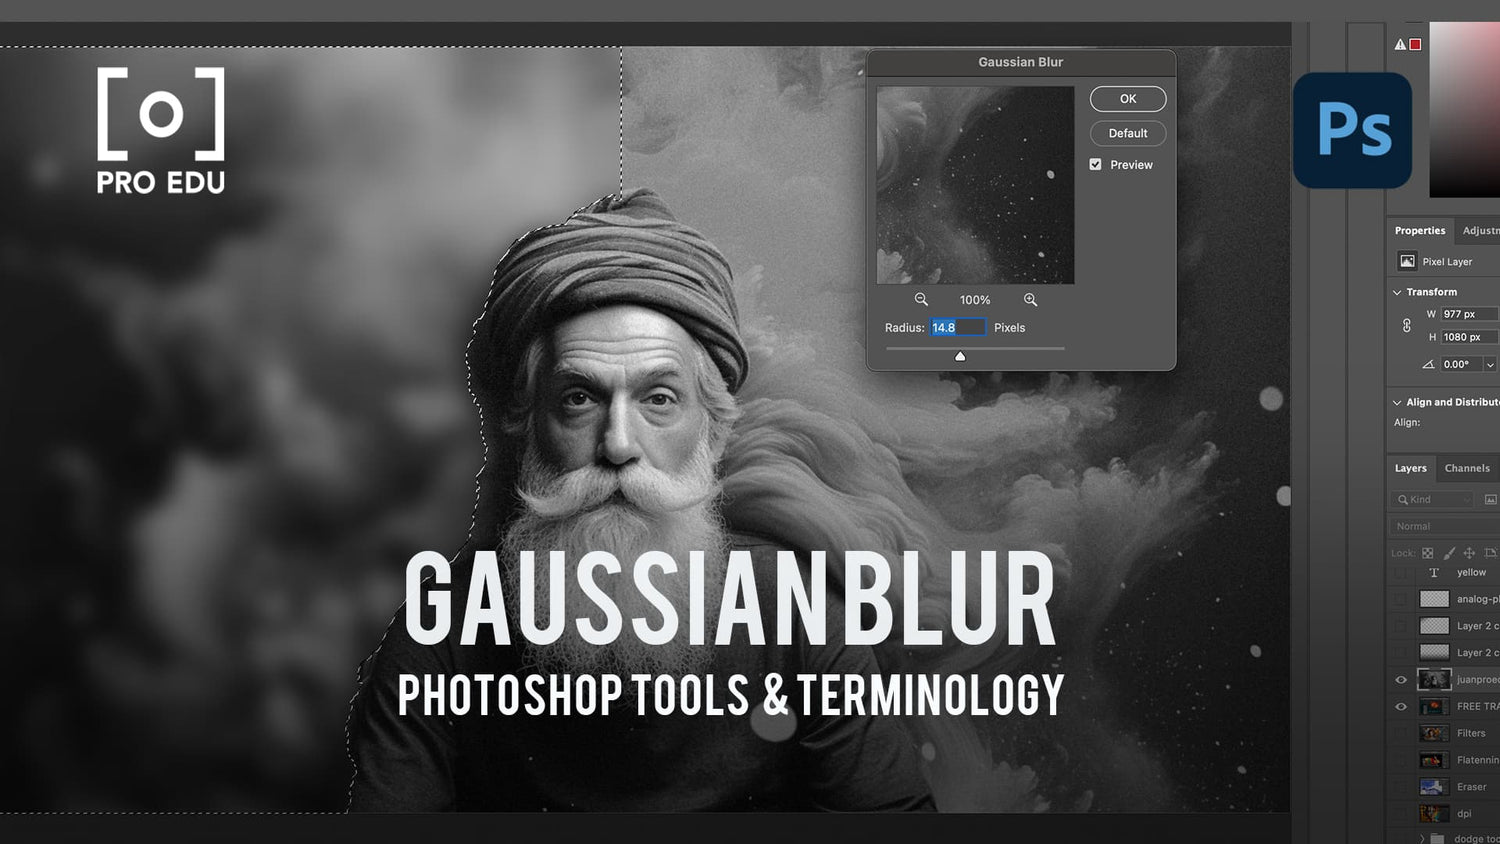 Gaussian Blur Effect in Photoshop - PRO EDU Guide